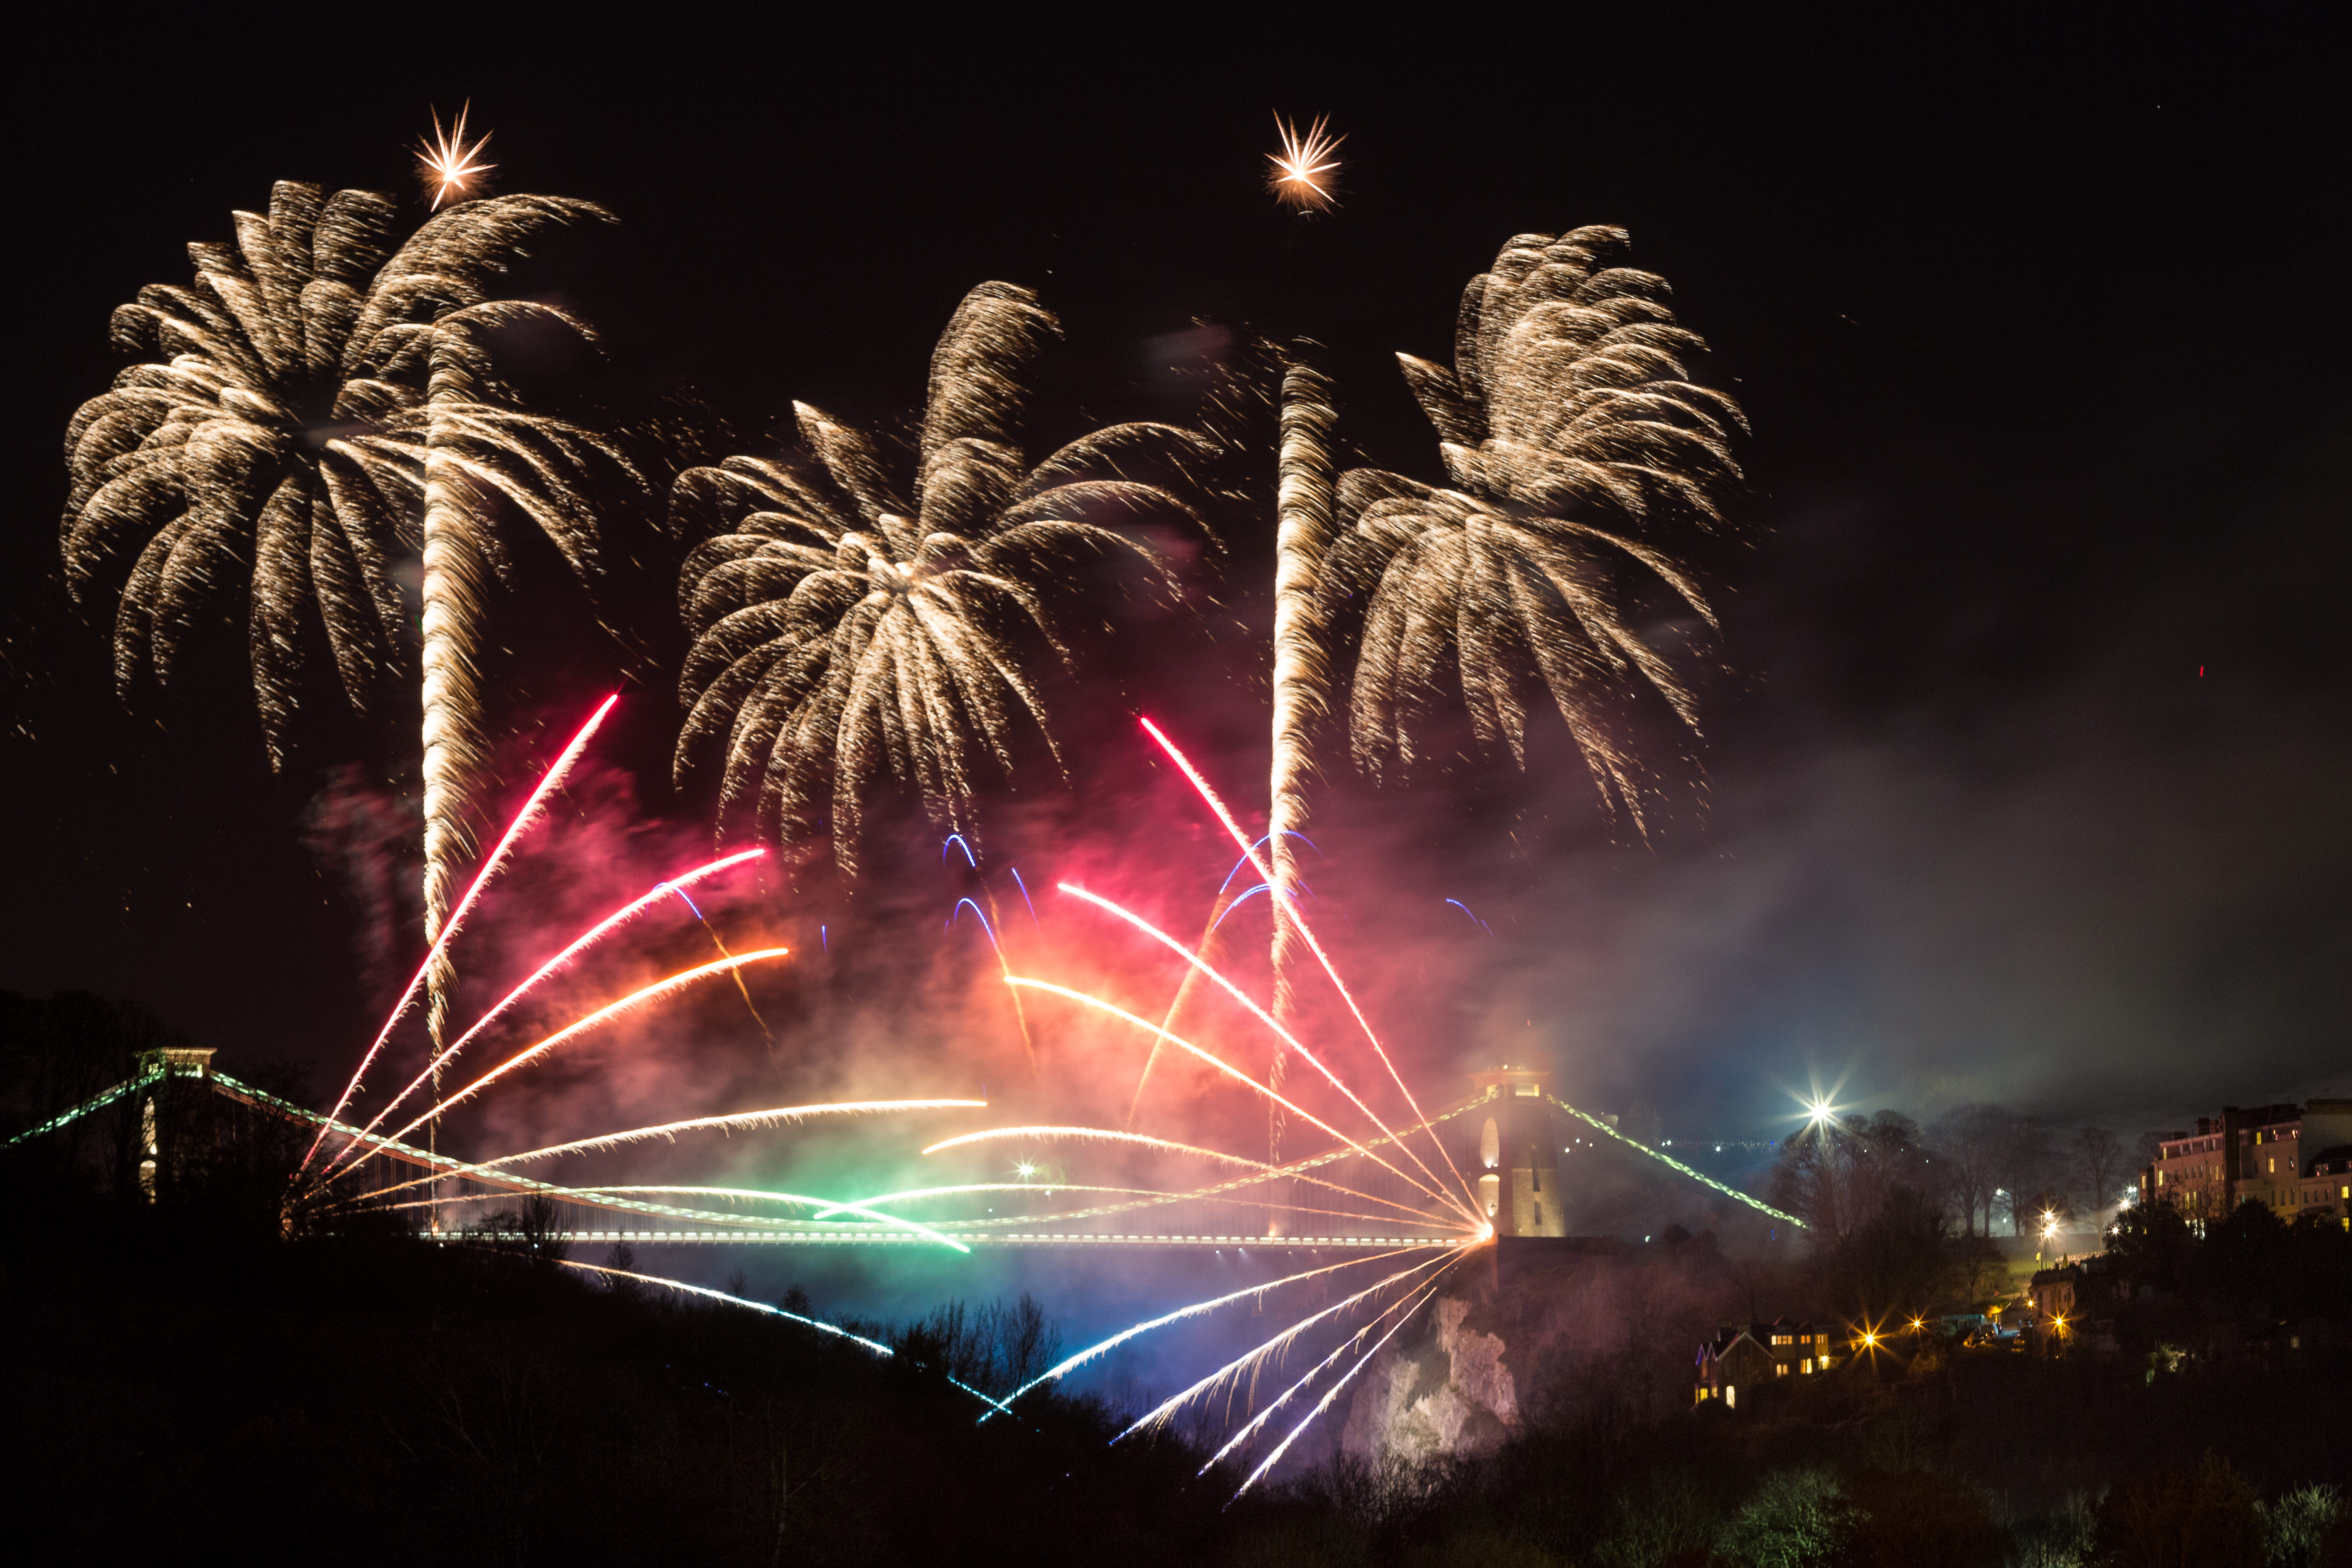 Clifton Suspension Bridge #fireworks150